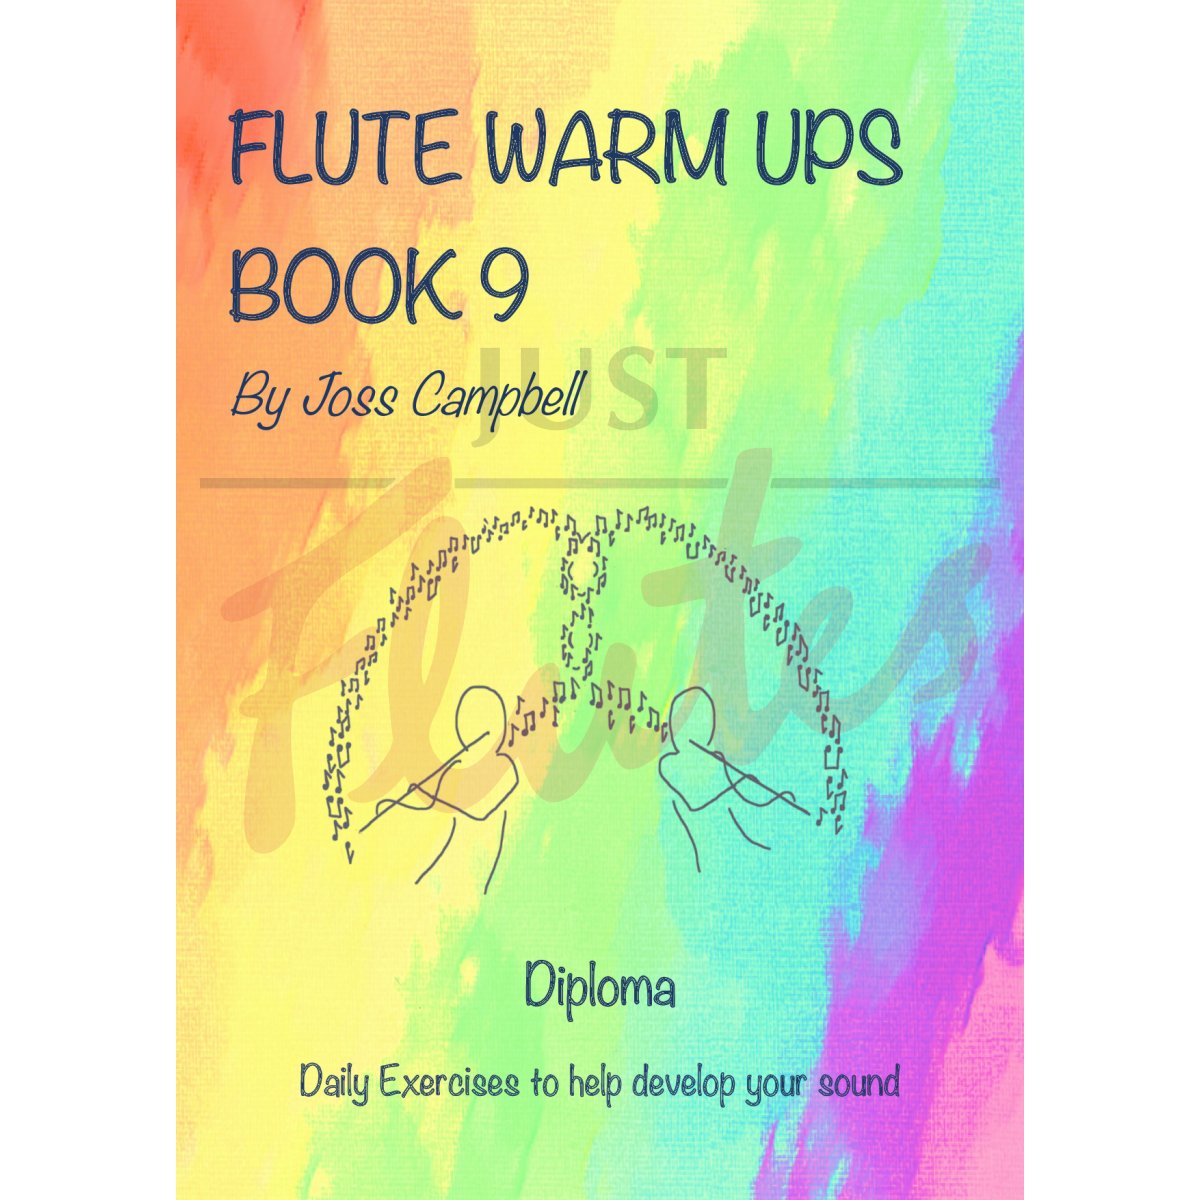 Flute Warm Ups Book 9 Diploma